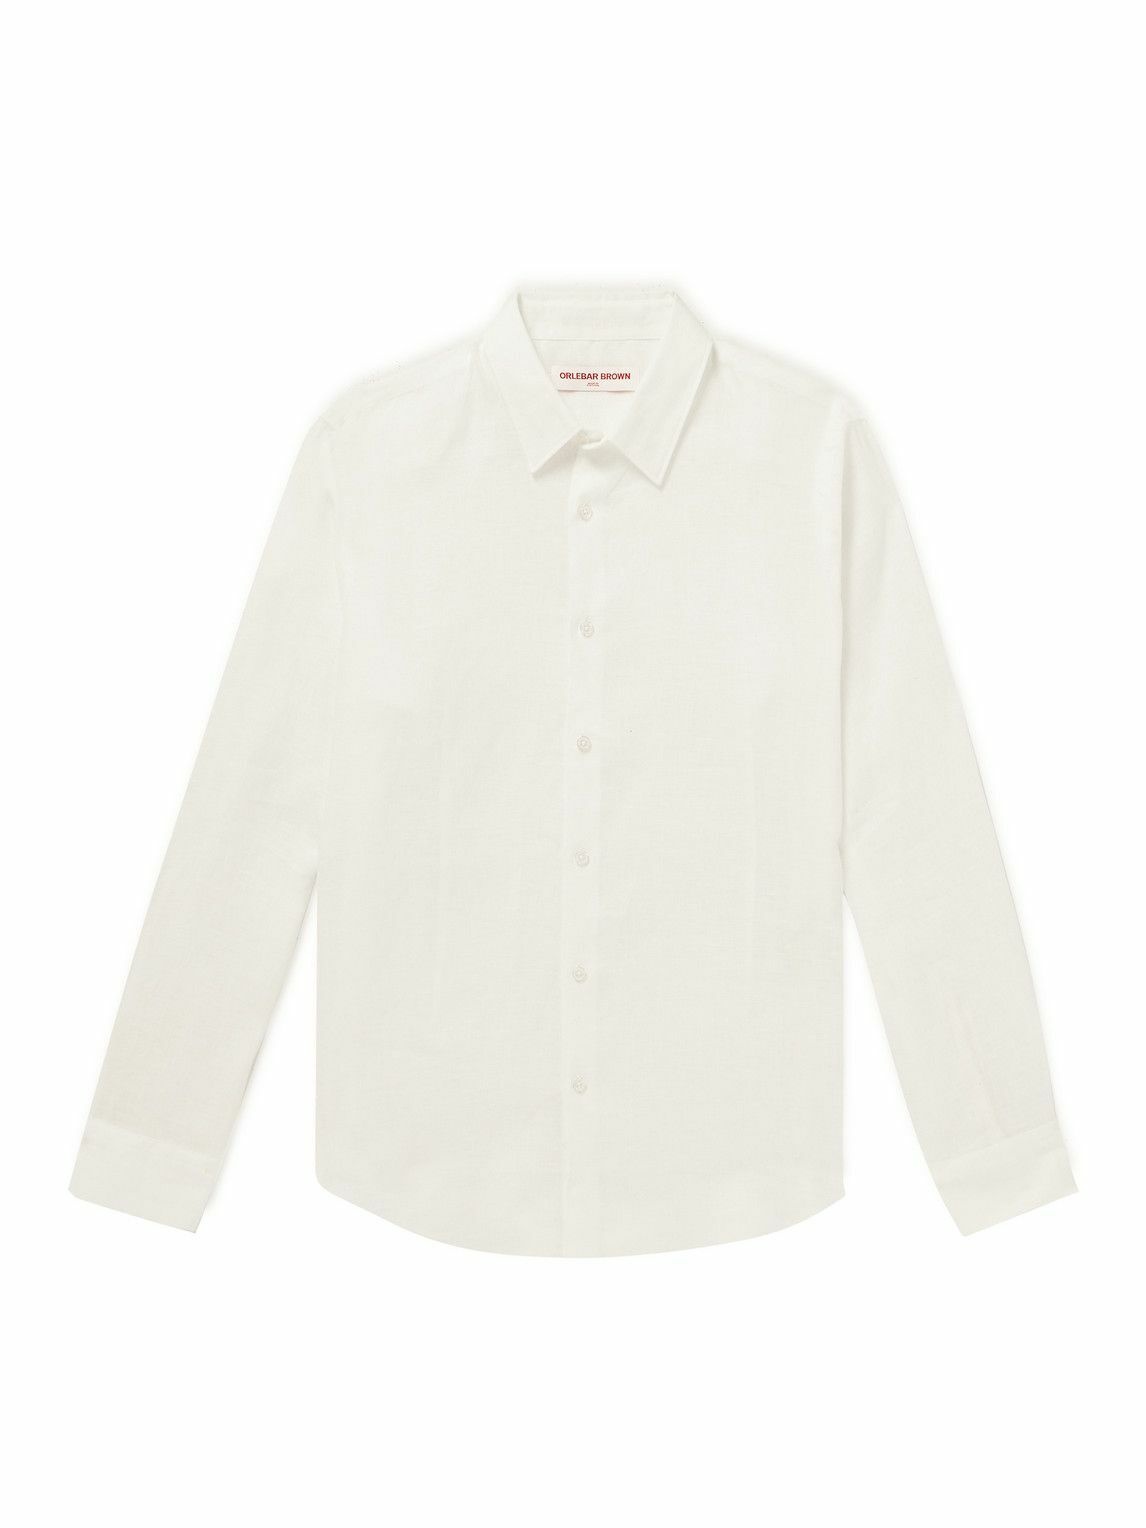 Orlebar Brown - Giles Linen Shirt - White Orlebar Brown